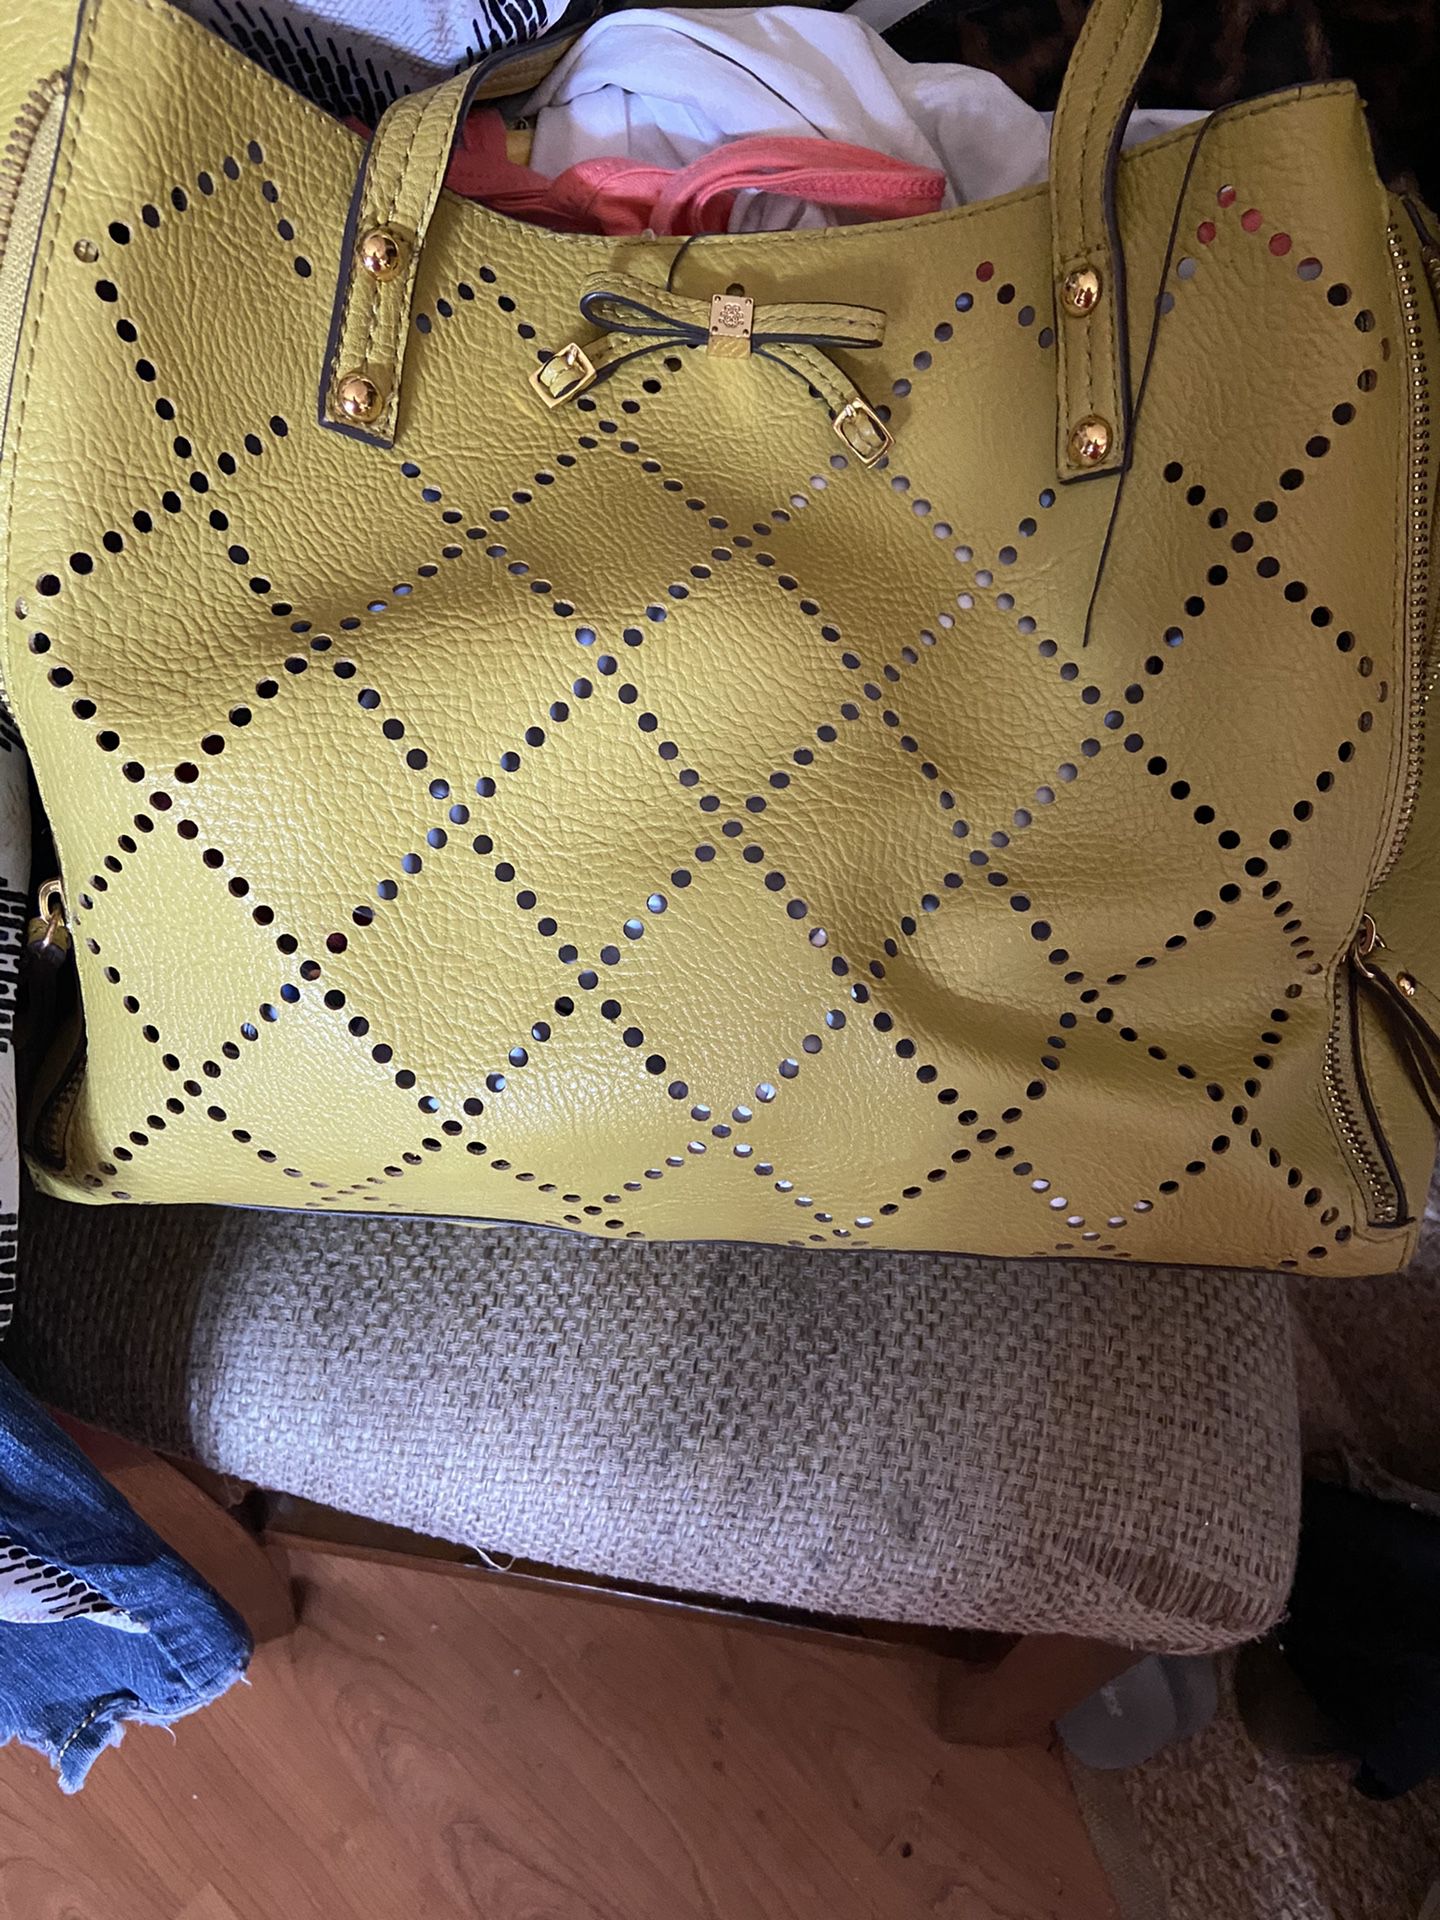 Jessica Simpson purse